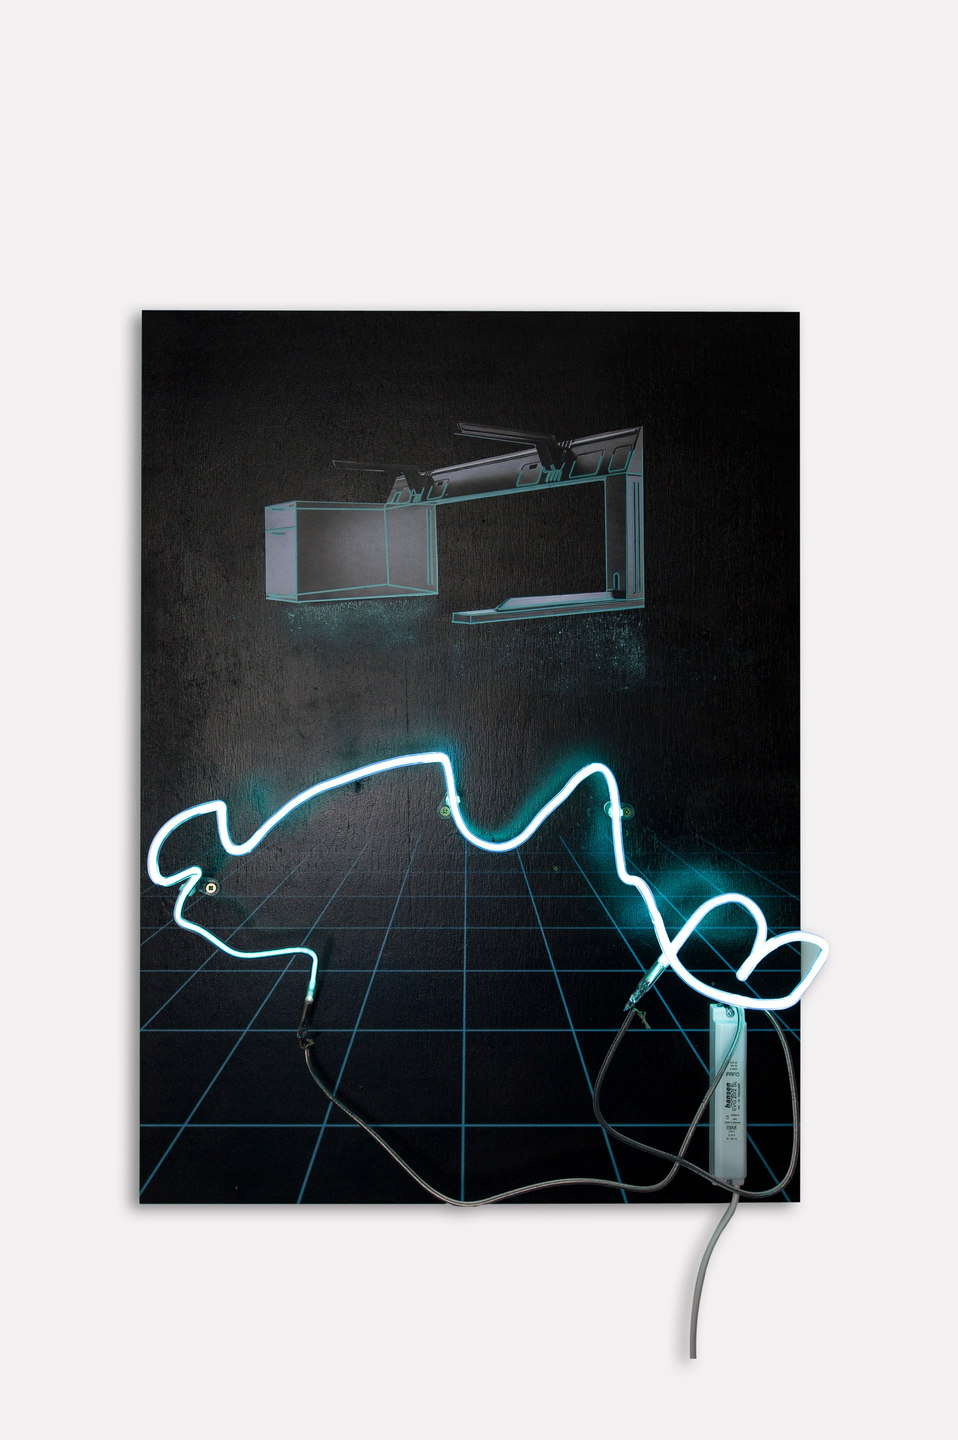 Florian Auer, Not Yet Titled (desk), 2013, print on black board, paper, chalk, neon, transformer, (80 x 59 x 13 cm)